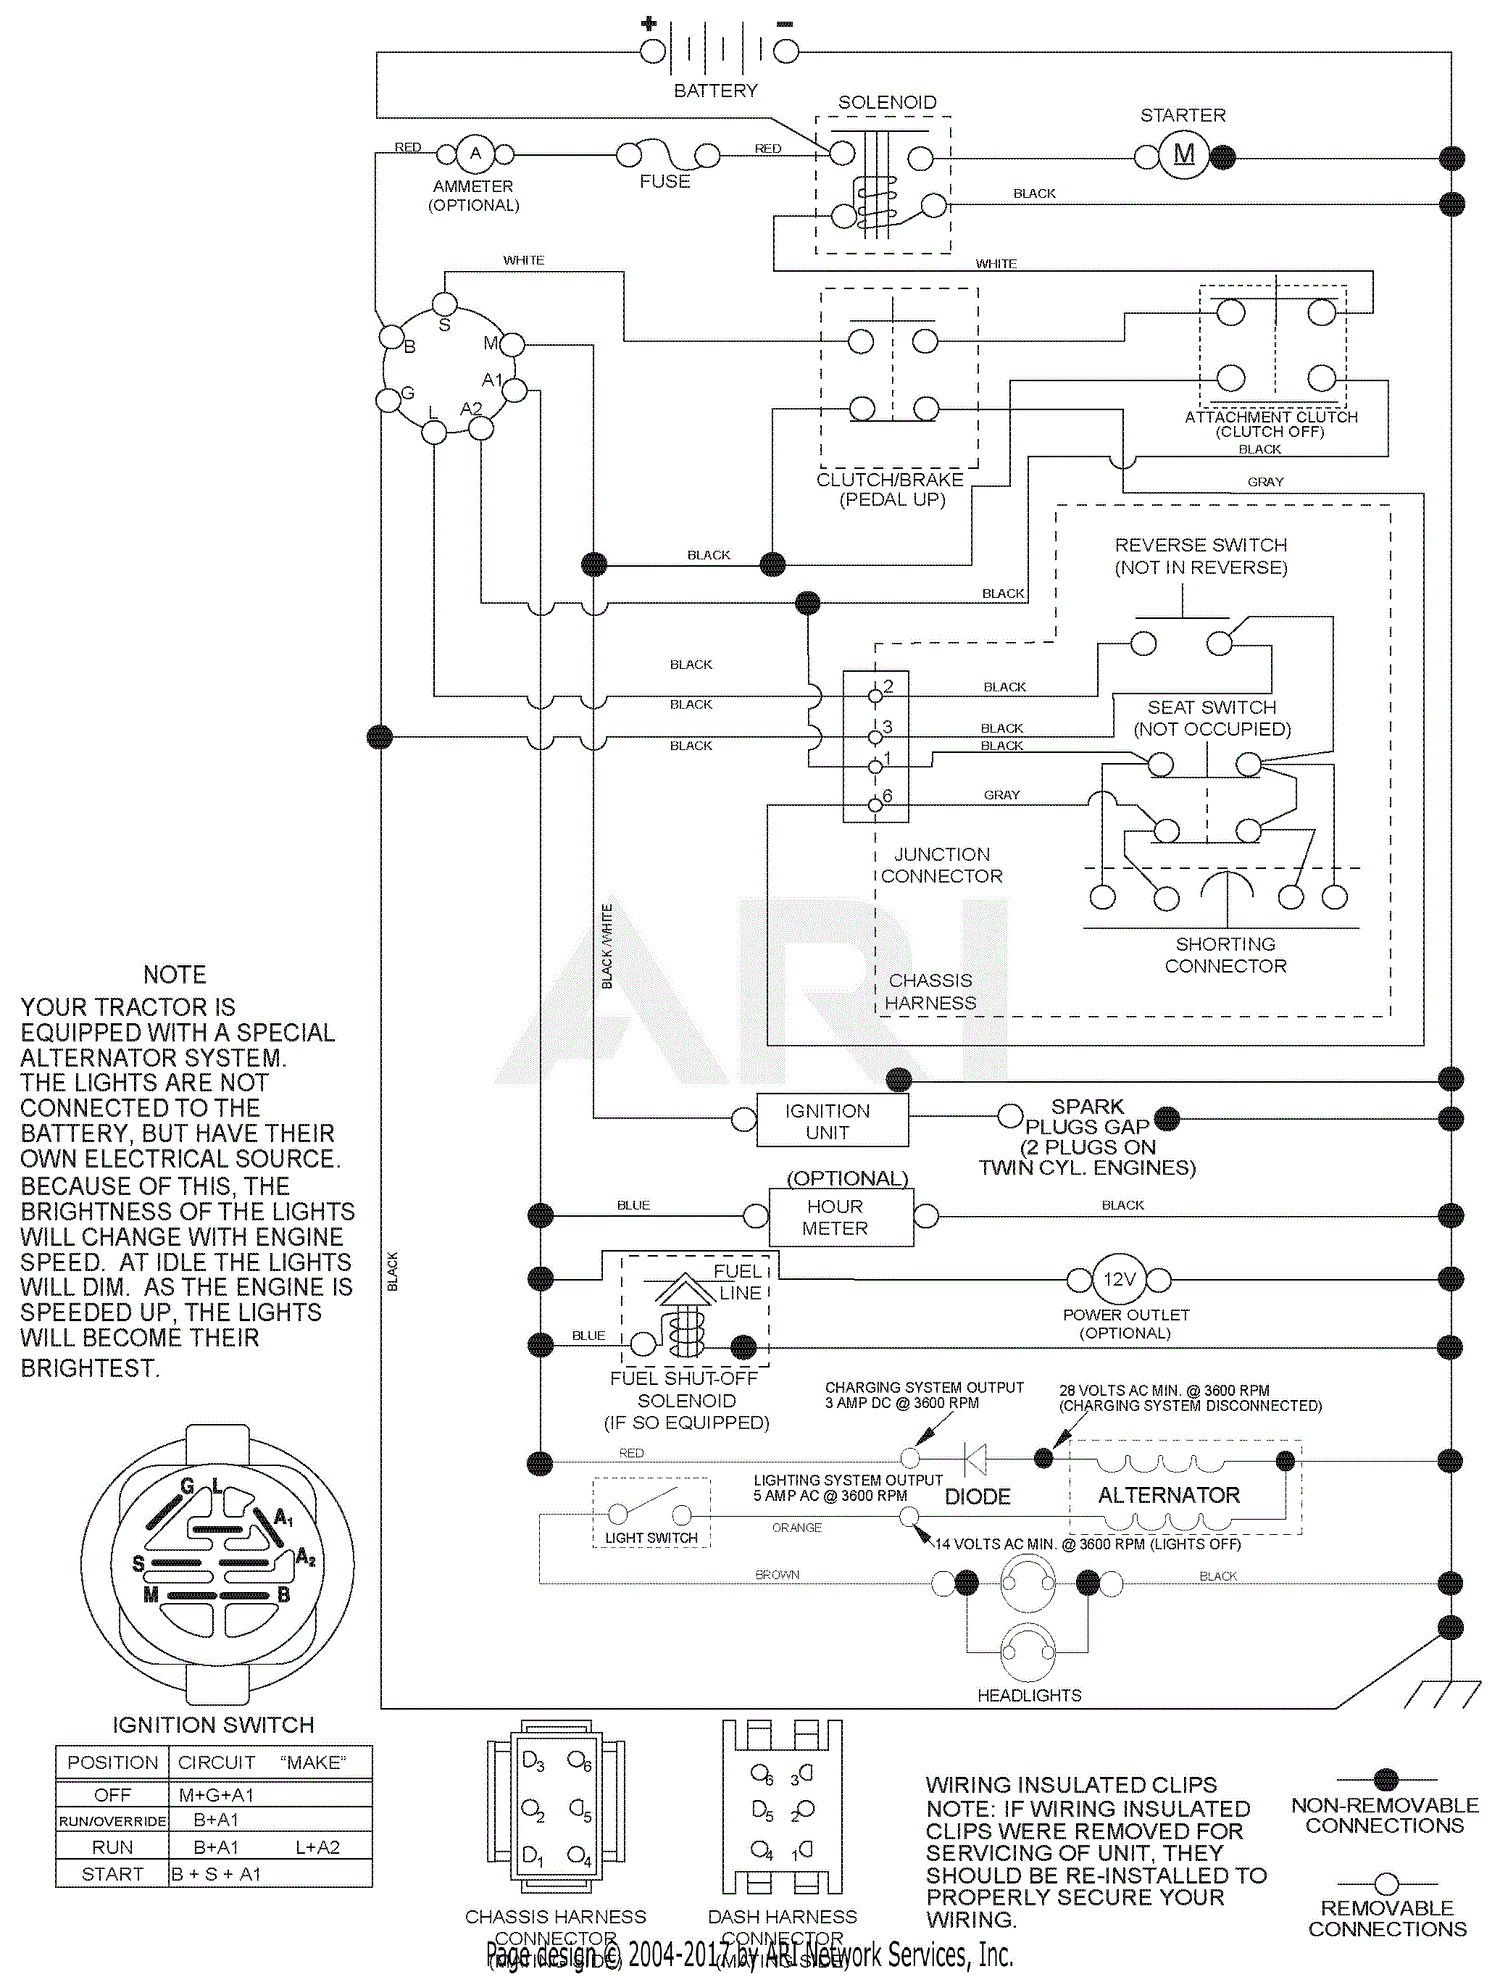 Ariens 936056 960460023 03 46 Hydro Tractor Parts Diagram For Schematic